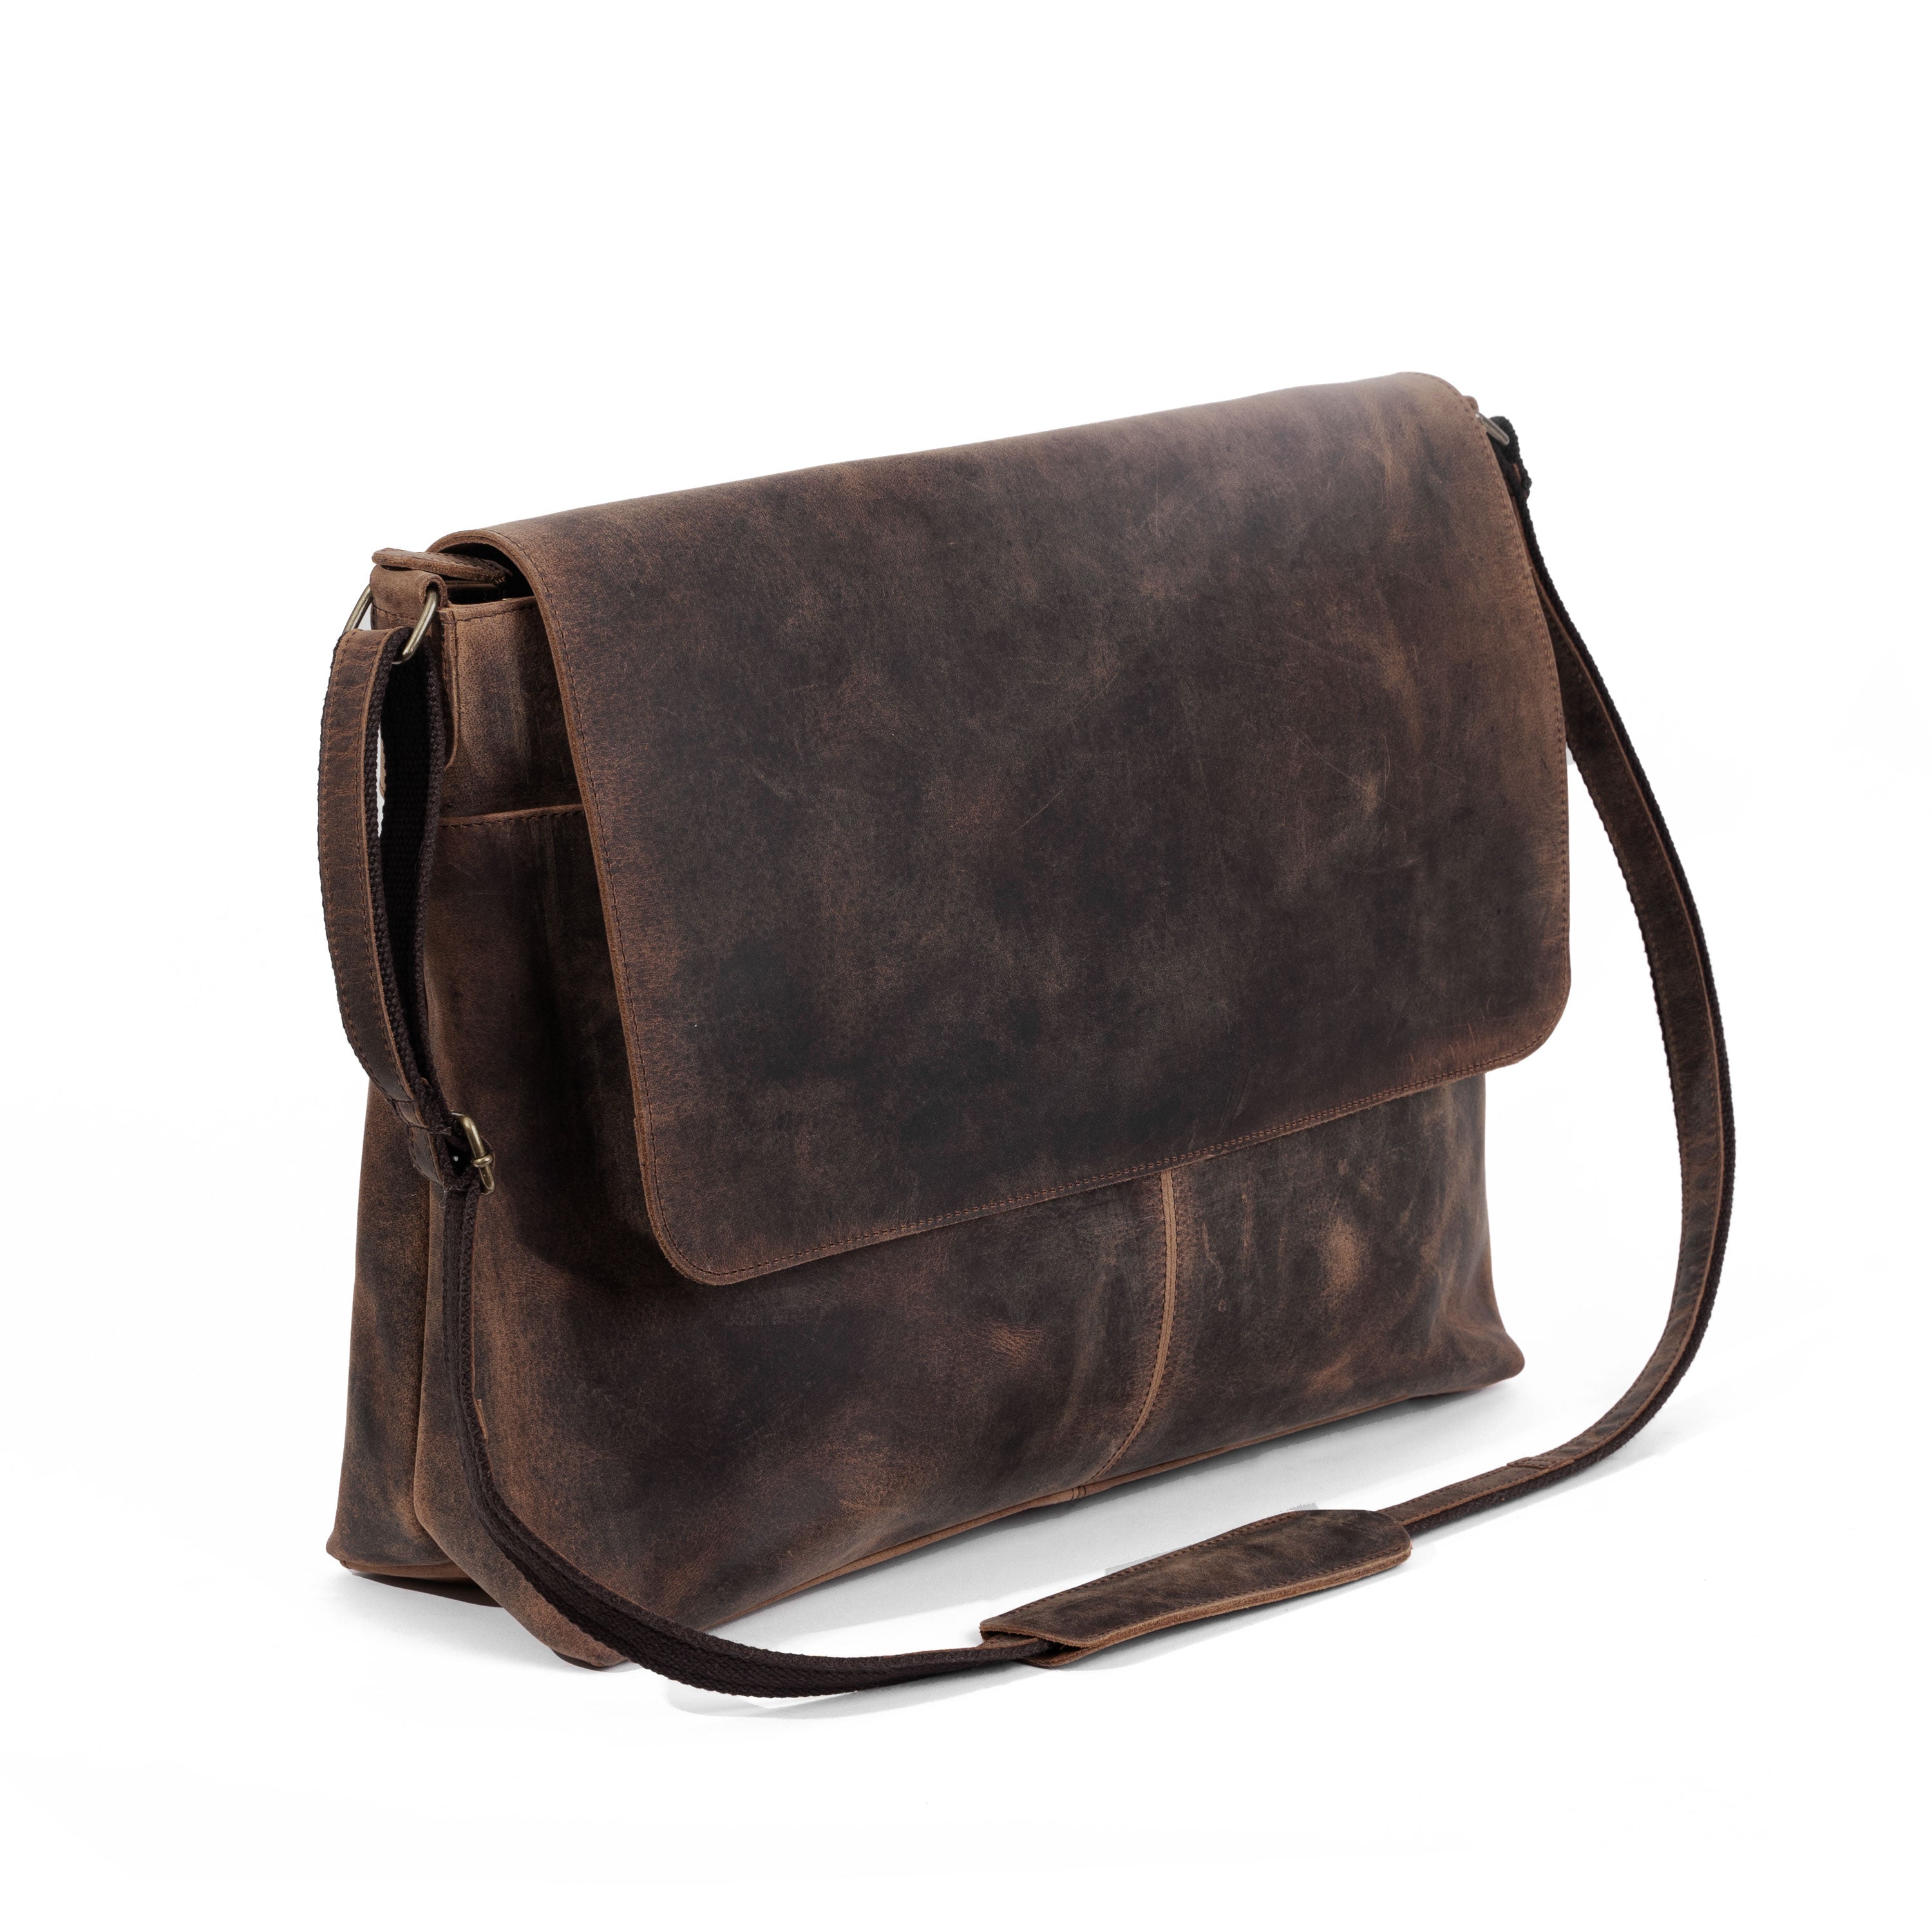 C Cuero 18 inch Leather Briefcases Laptop Messenger Bags for Men and Women Best Office School College Satchel Bag